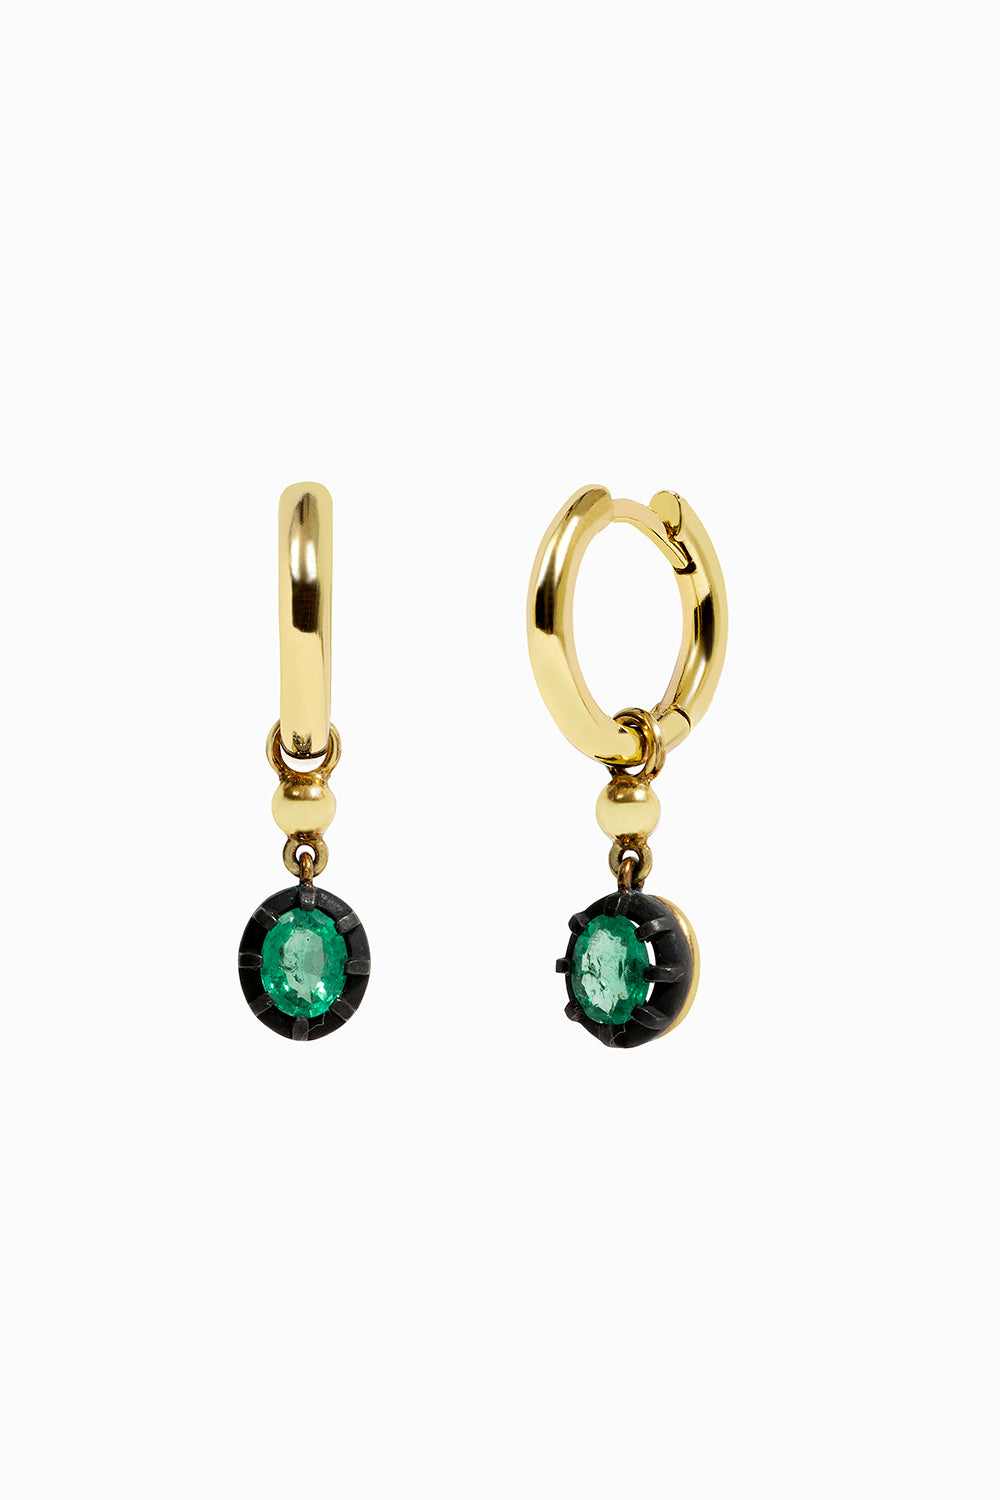 Emerald and ball hoop earrings